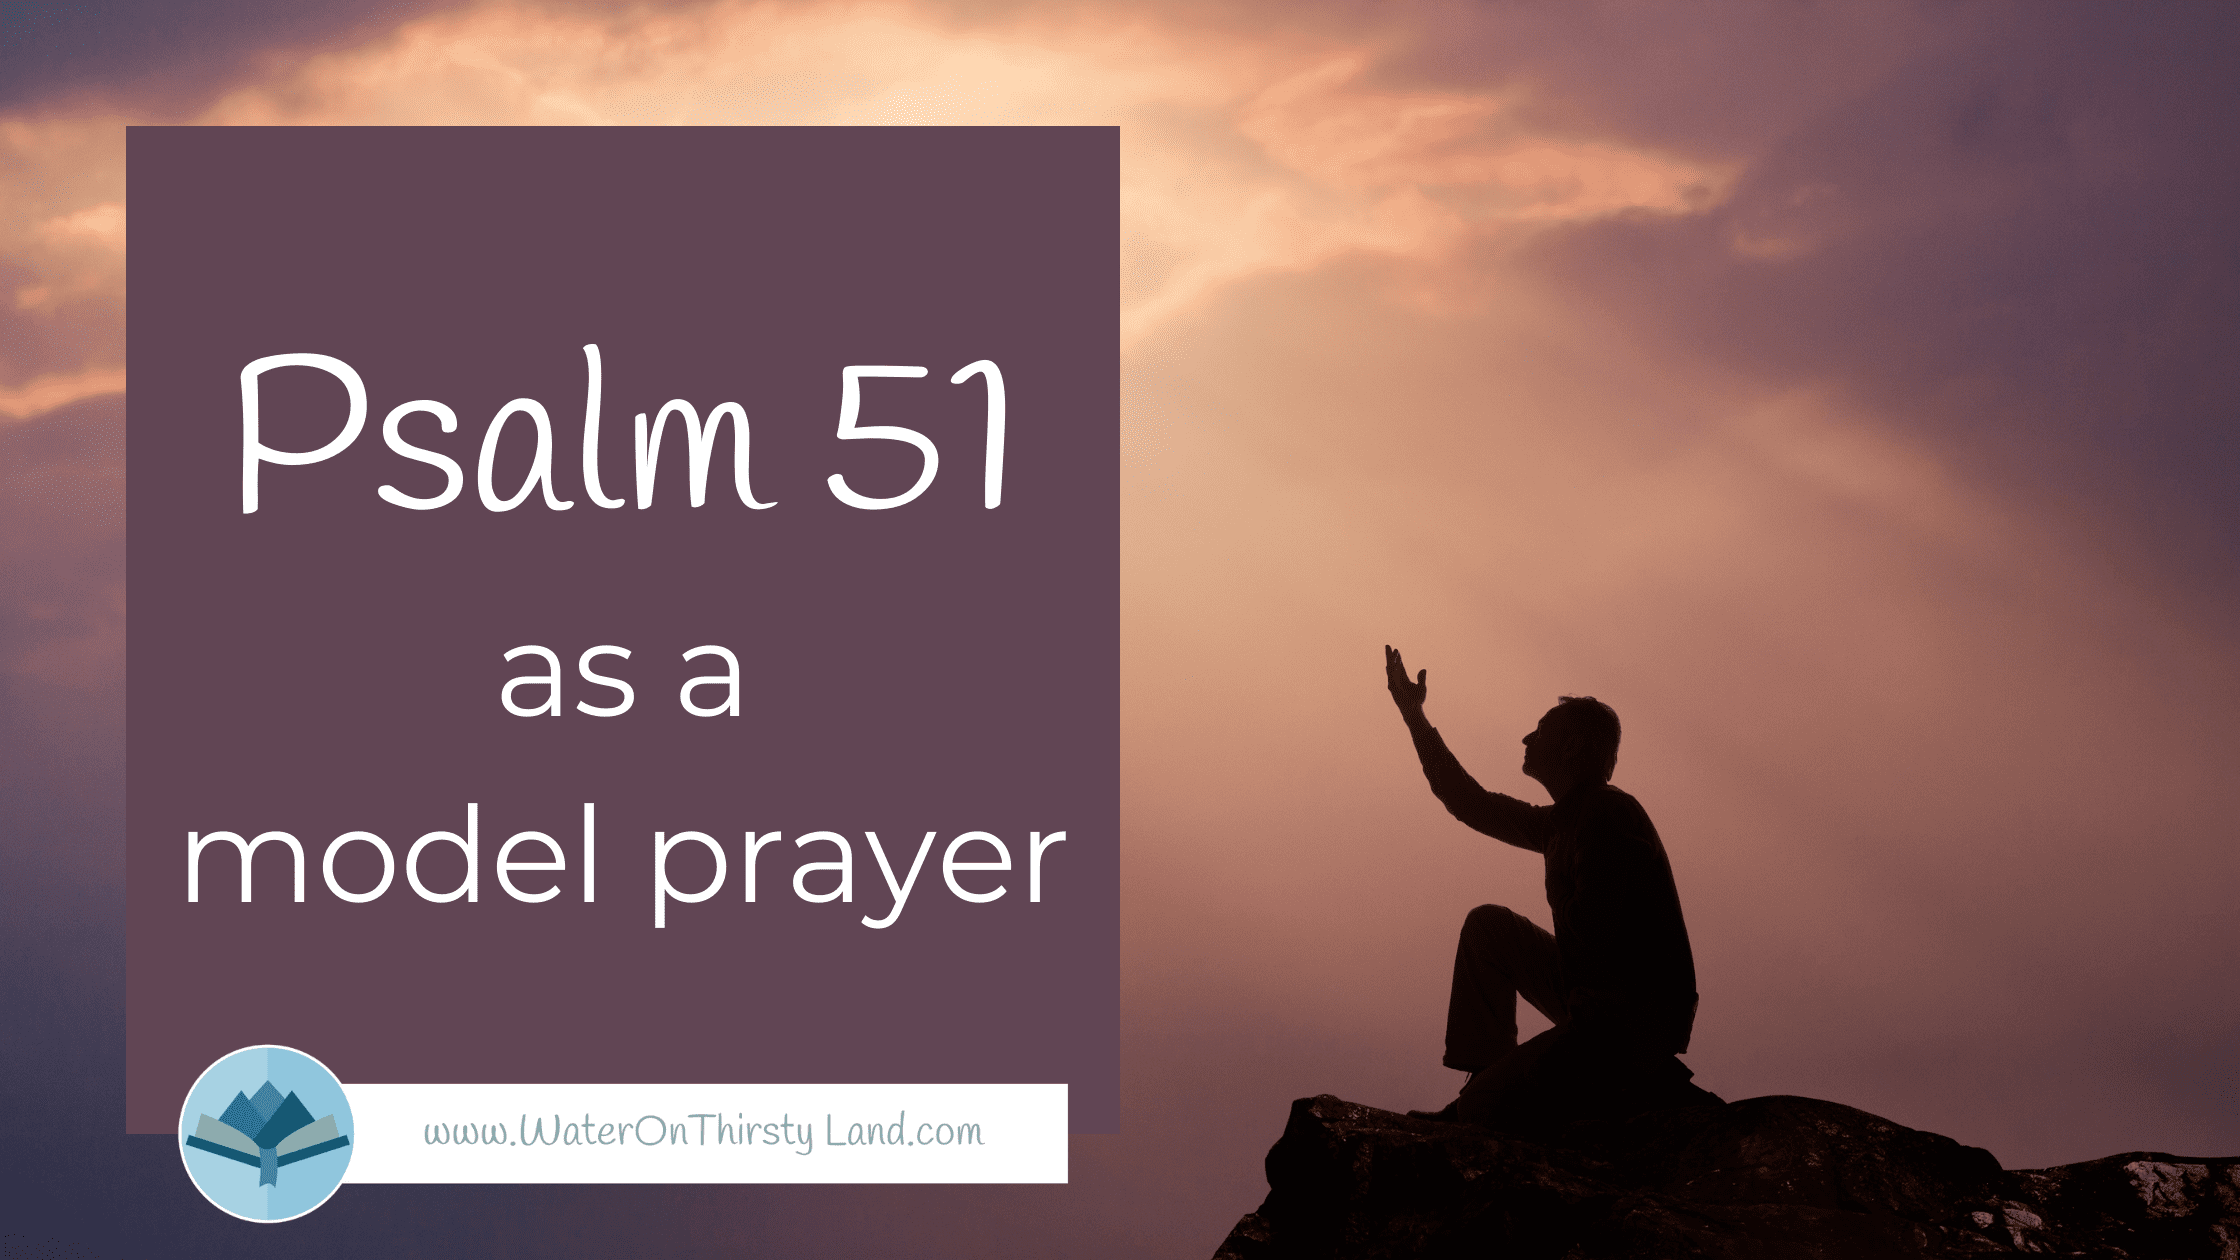 Psalm 51 as a model prayer